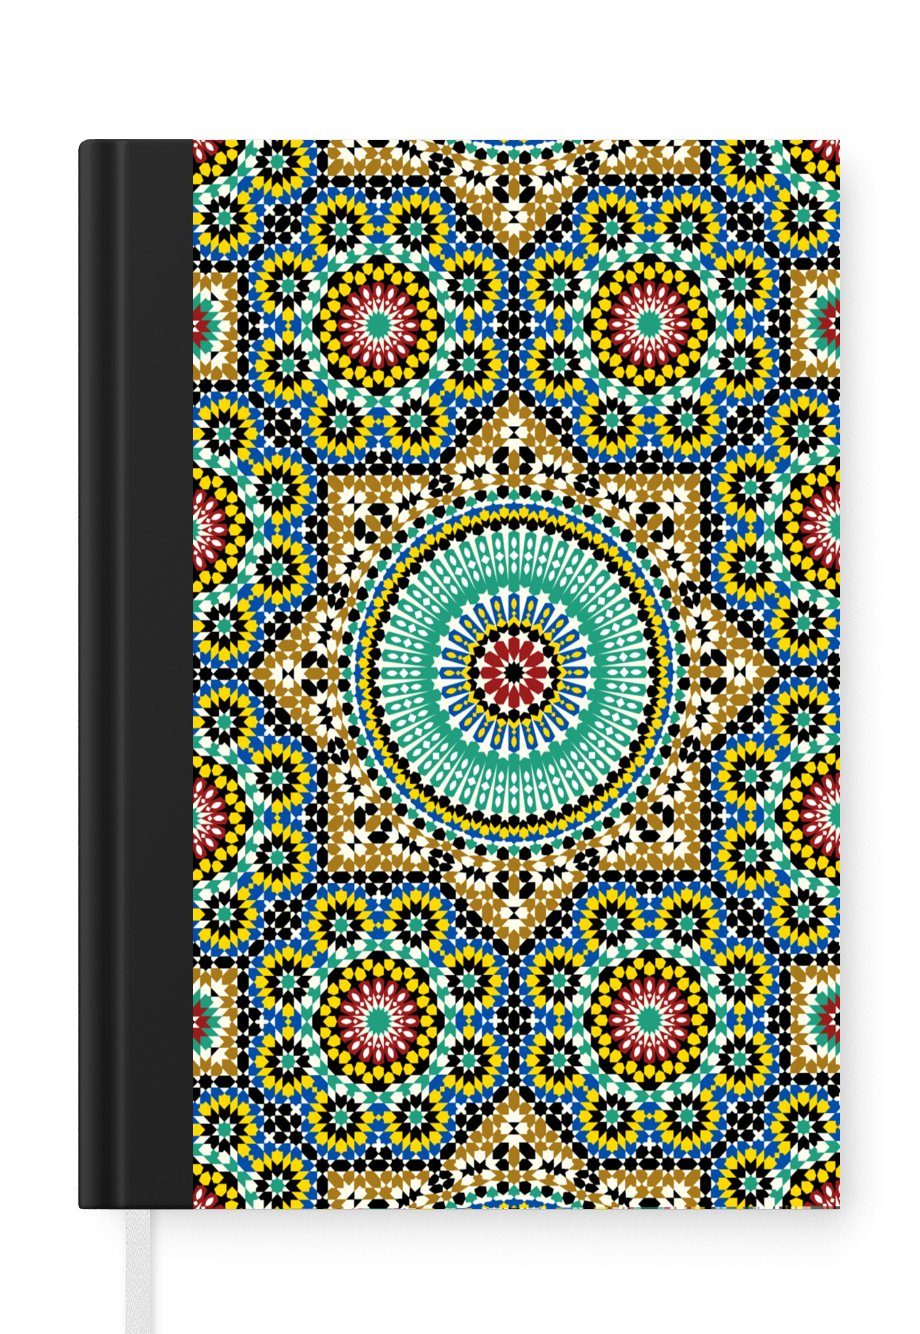 MuchoWow Notizbuch Mosaik - Muster - Mandala, Journal, Merkzettel, Tagebuch, Notizheft, A5, 98 Seiten, Haushaltsbuch